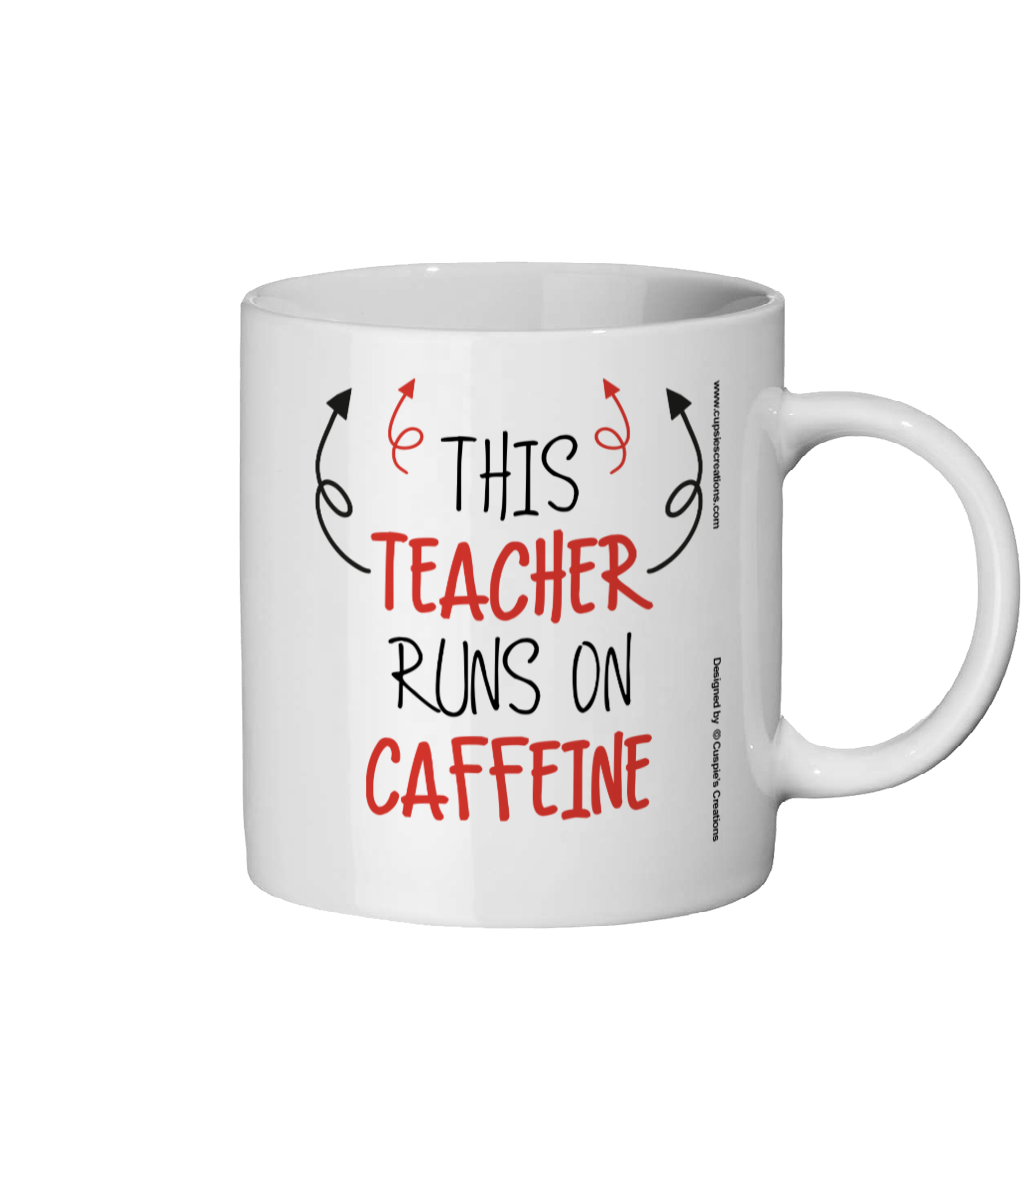 Funny Teacher Mug which reads "this teacher runs on caffeine" - Back View